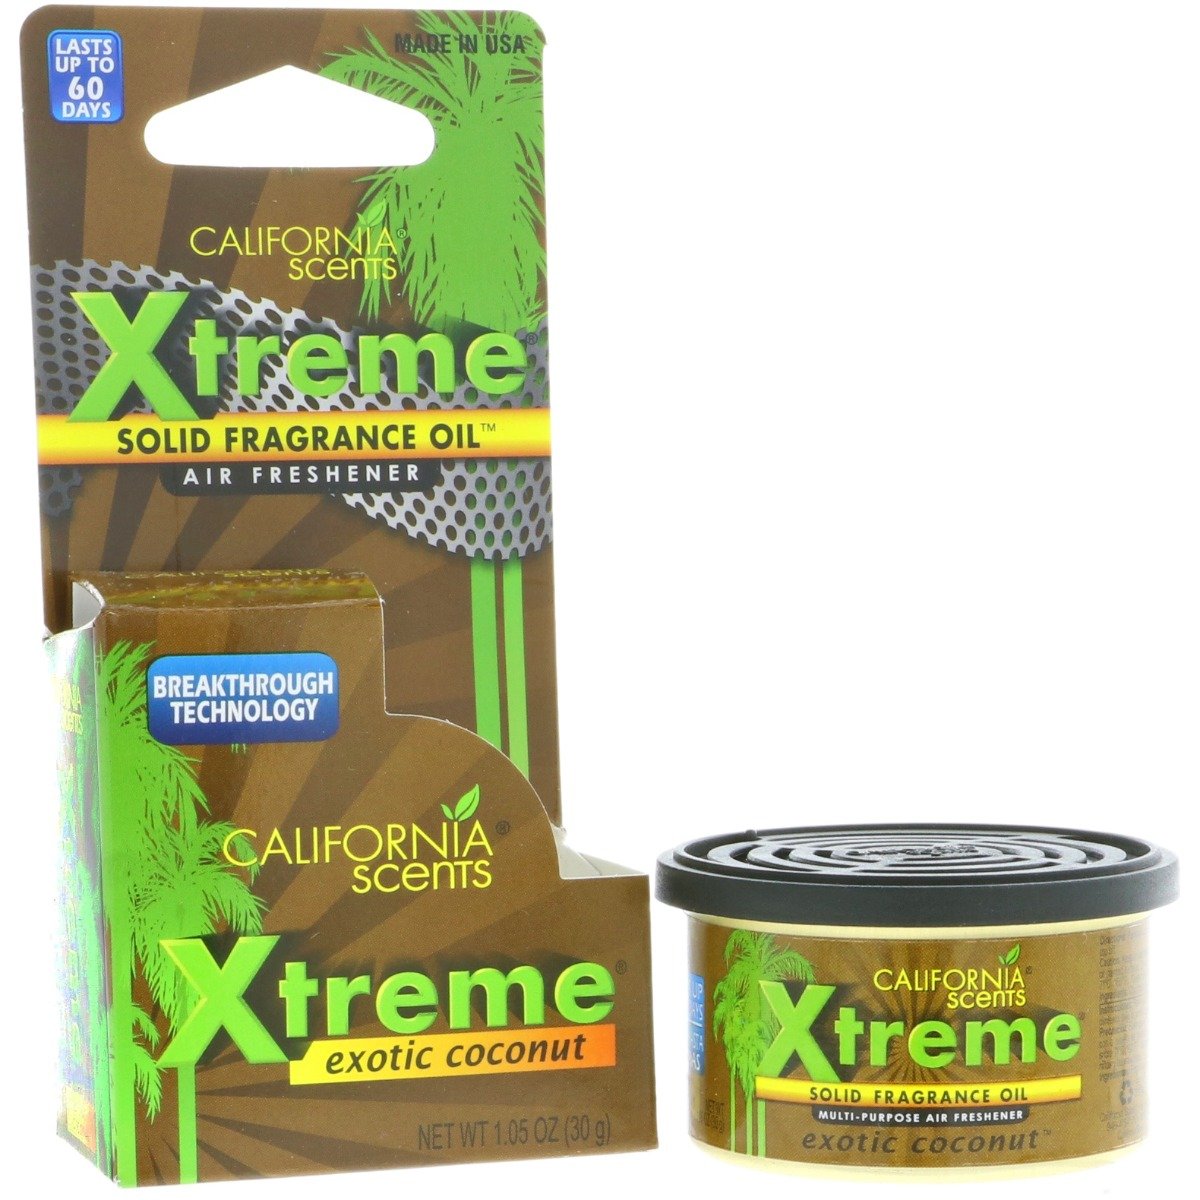 Xtreme Exotic Coconut